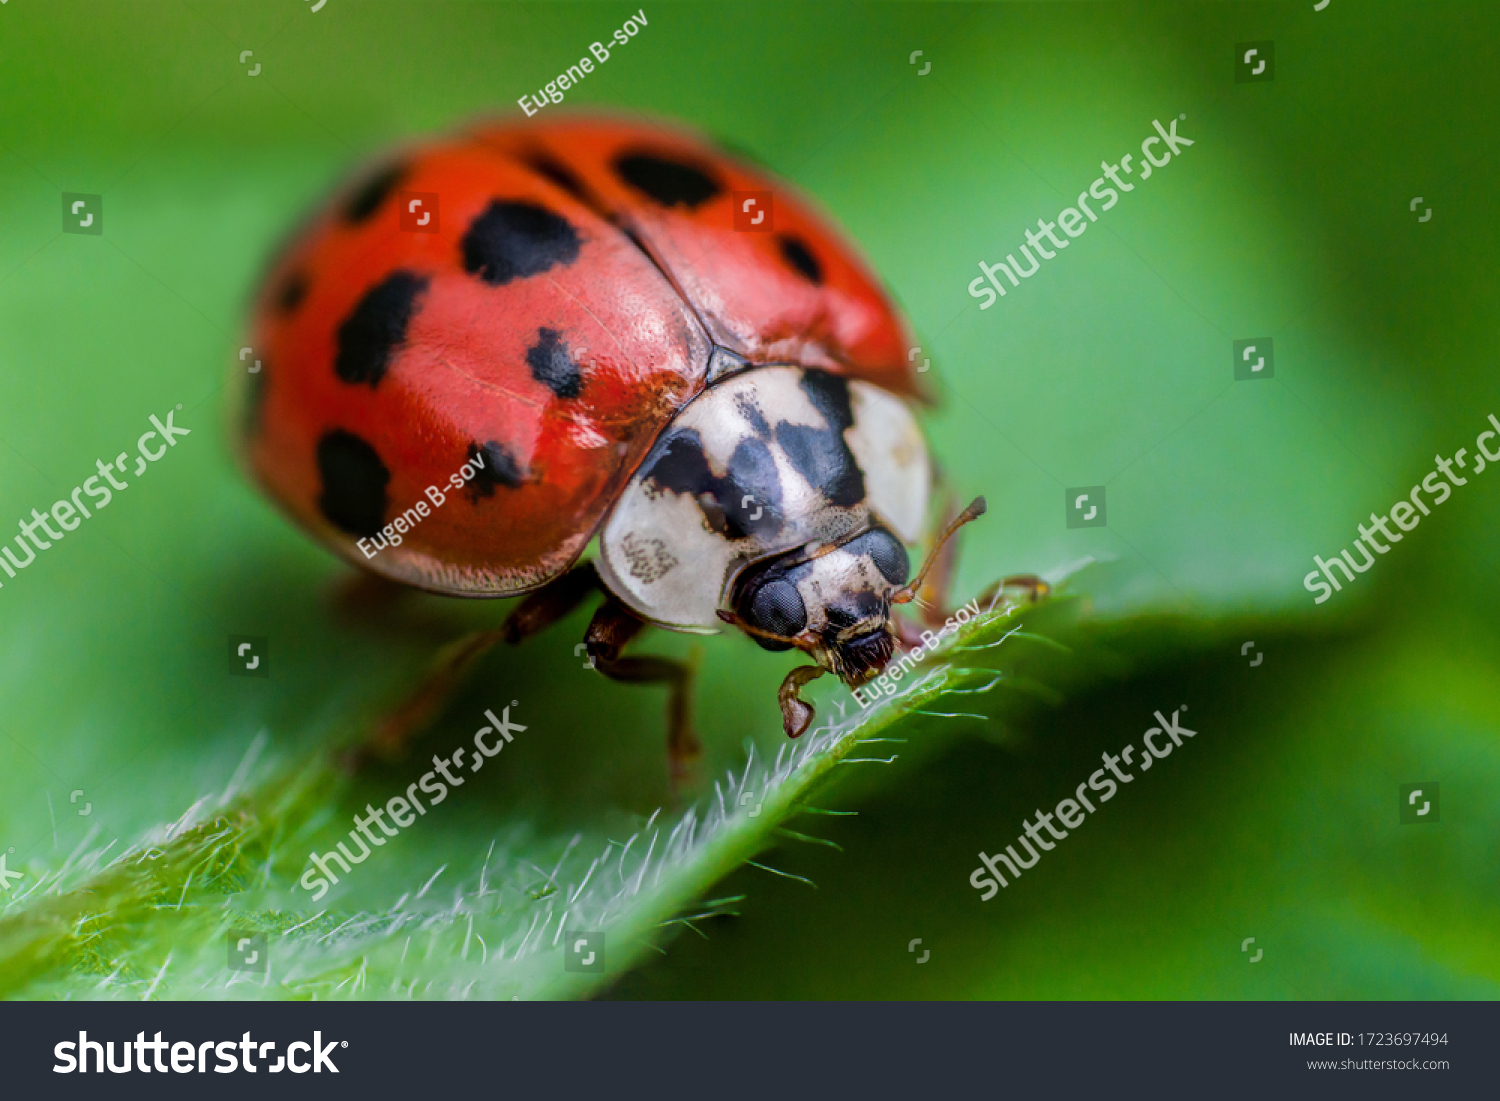 Ladybug with black eyes in macro. Super macro photo of insects and bugs. Ladybug on green leaf. #1723697494